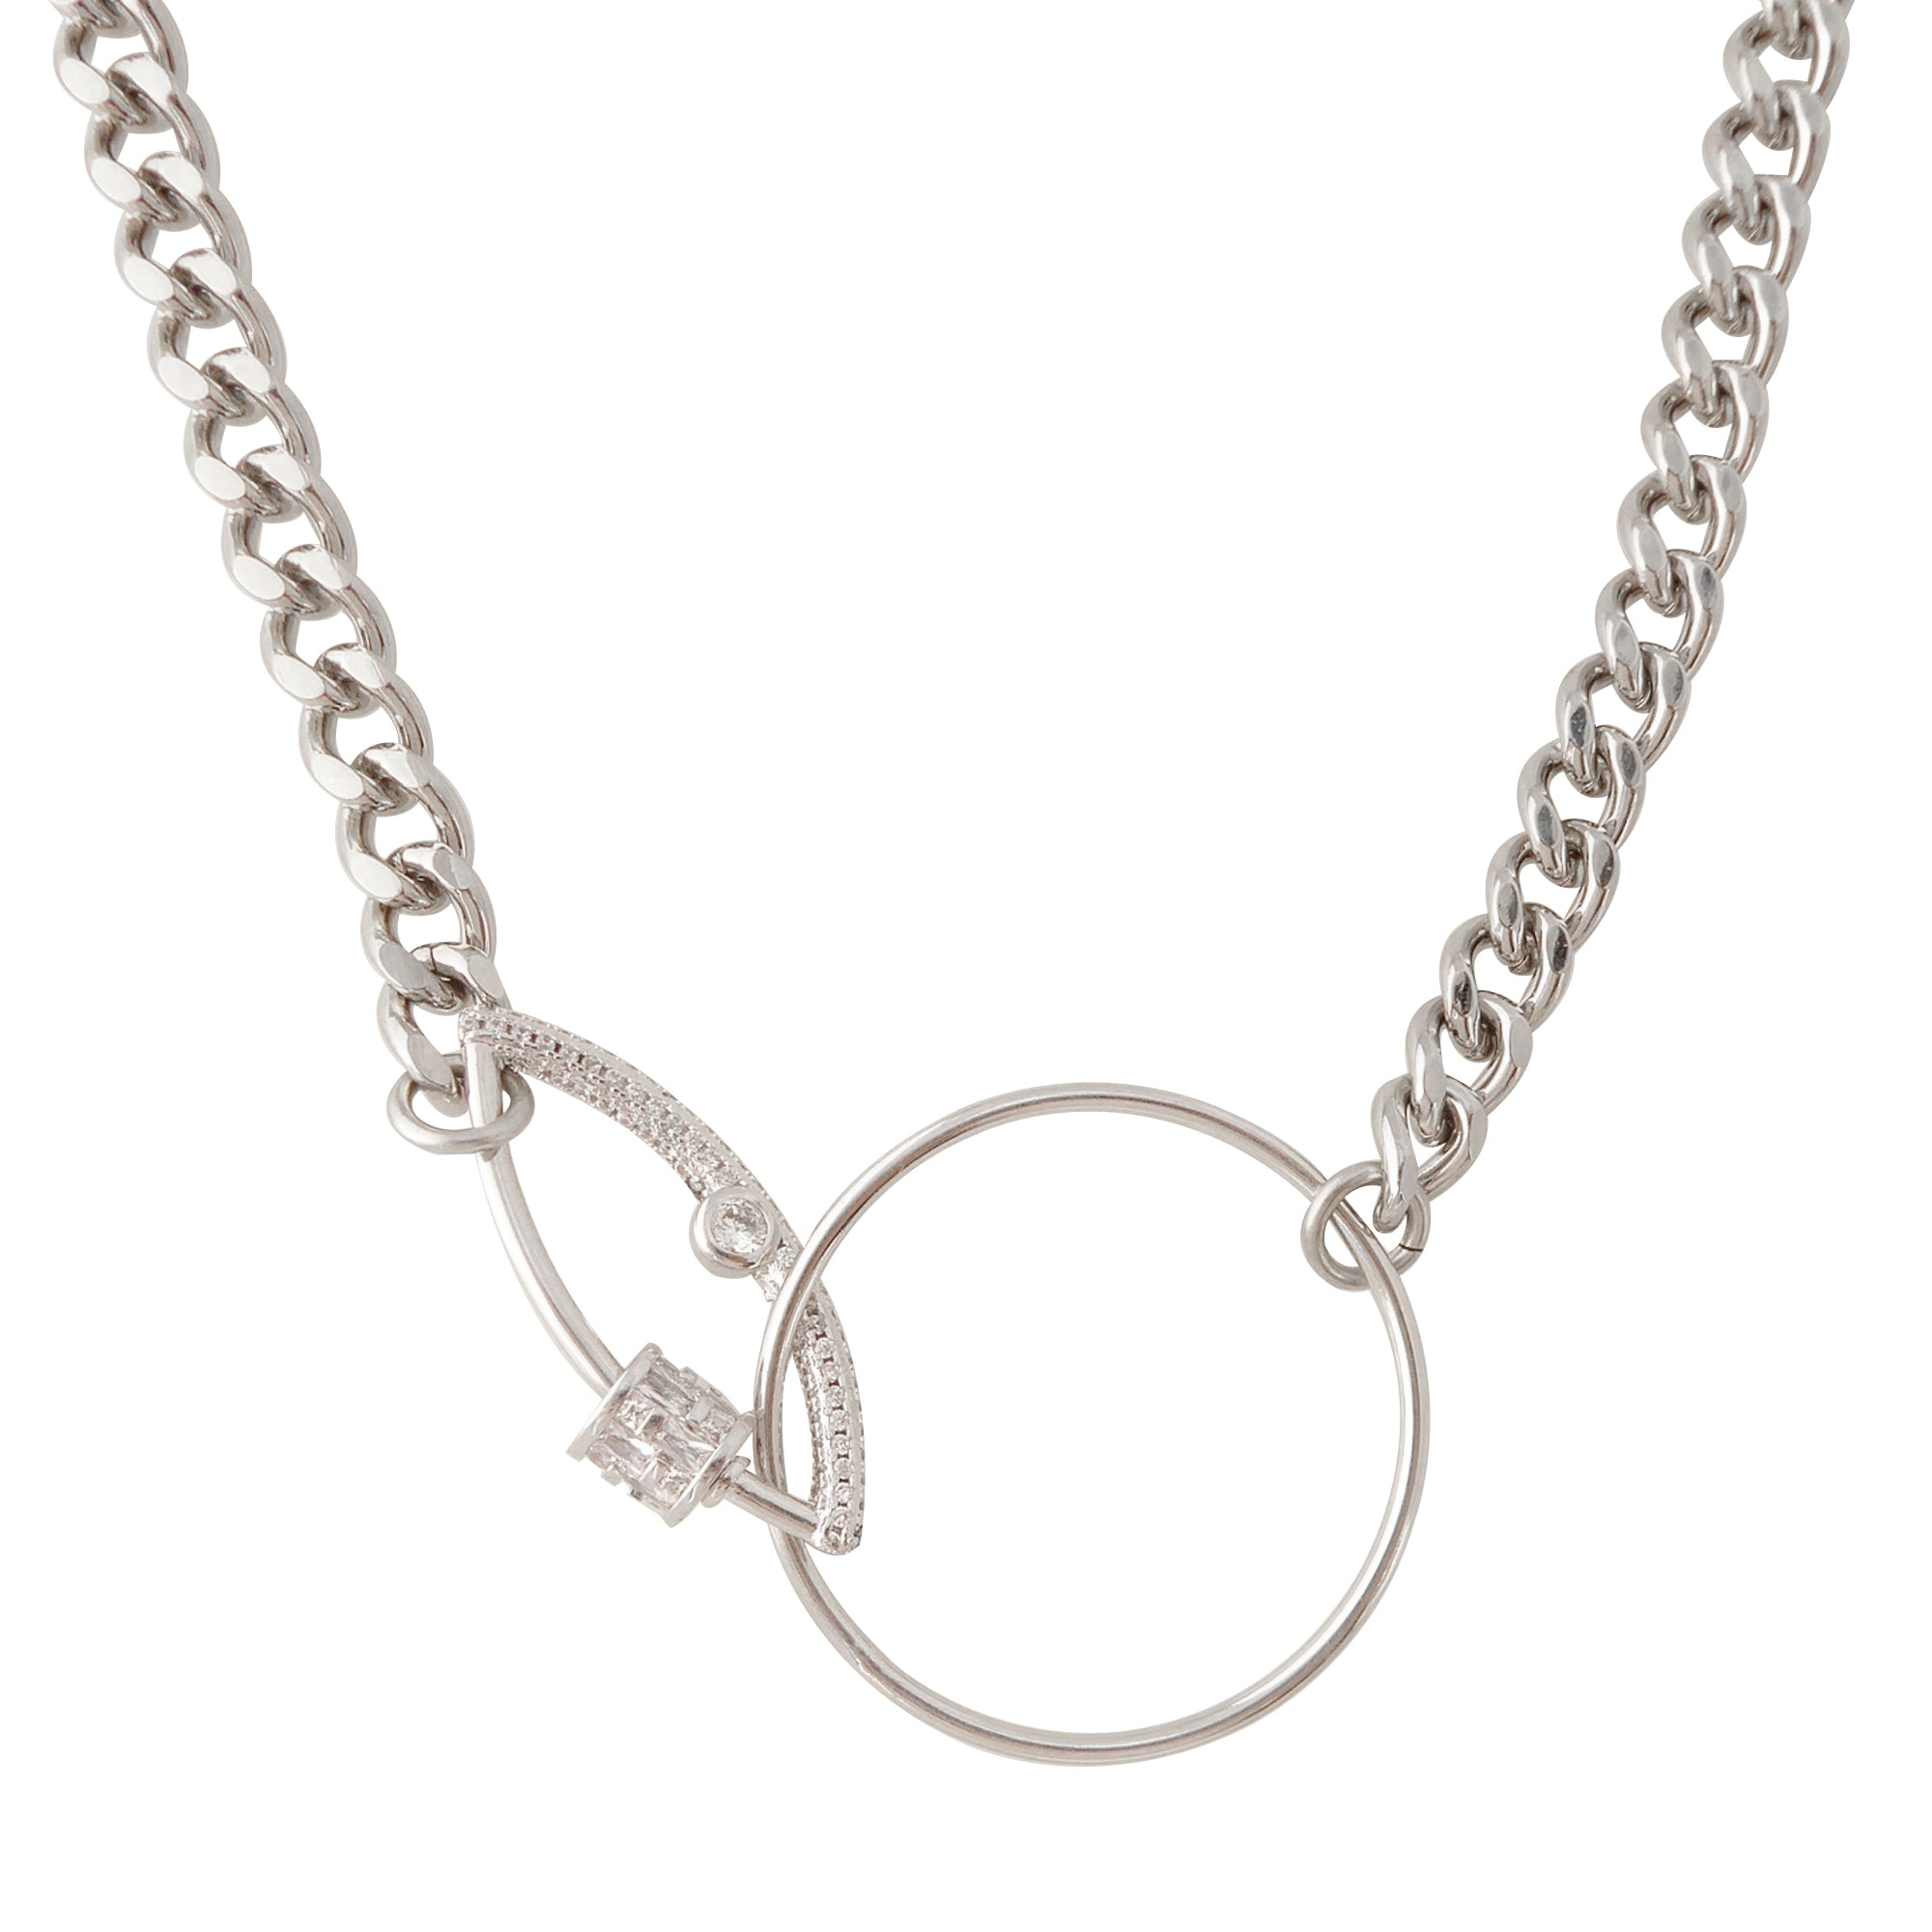 Silver rhinestone eye carabiner necklace by Jenny Dayco 1